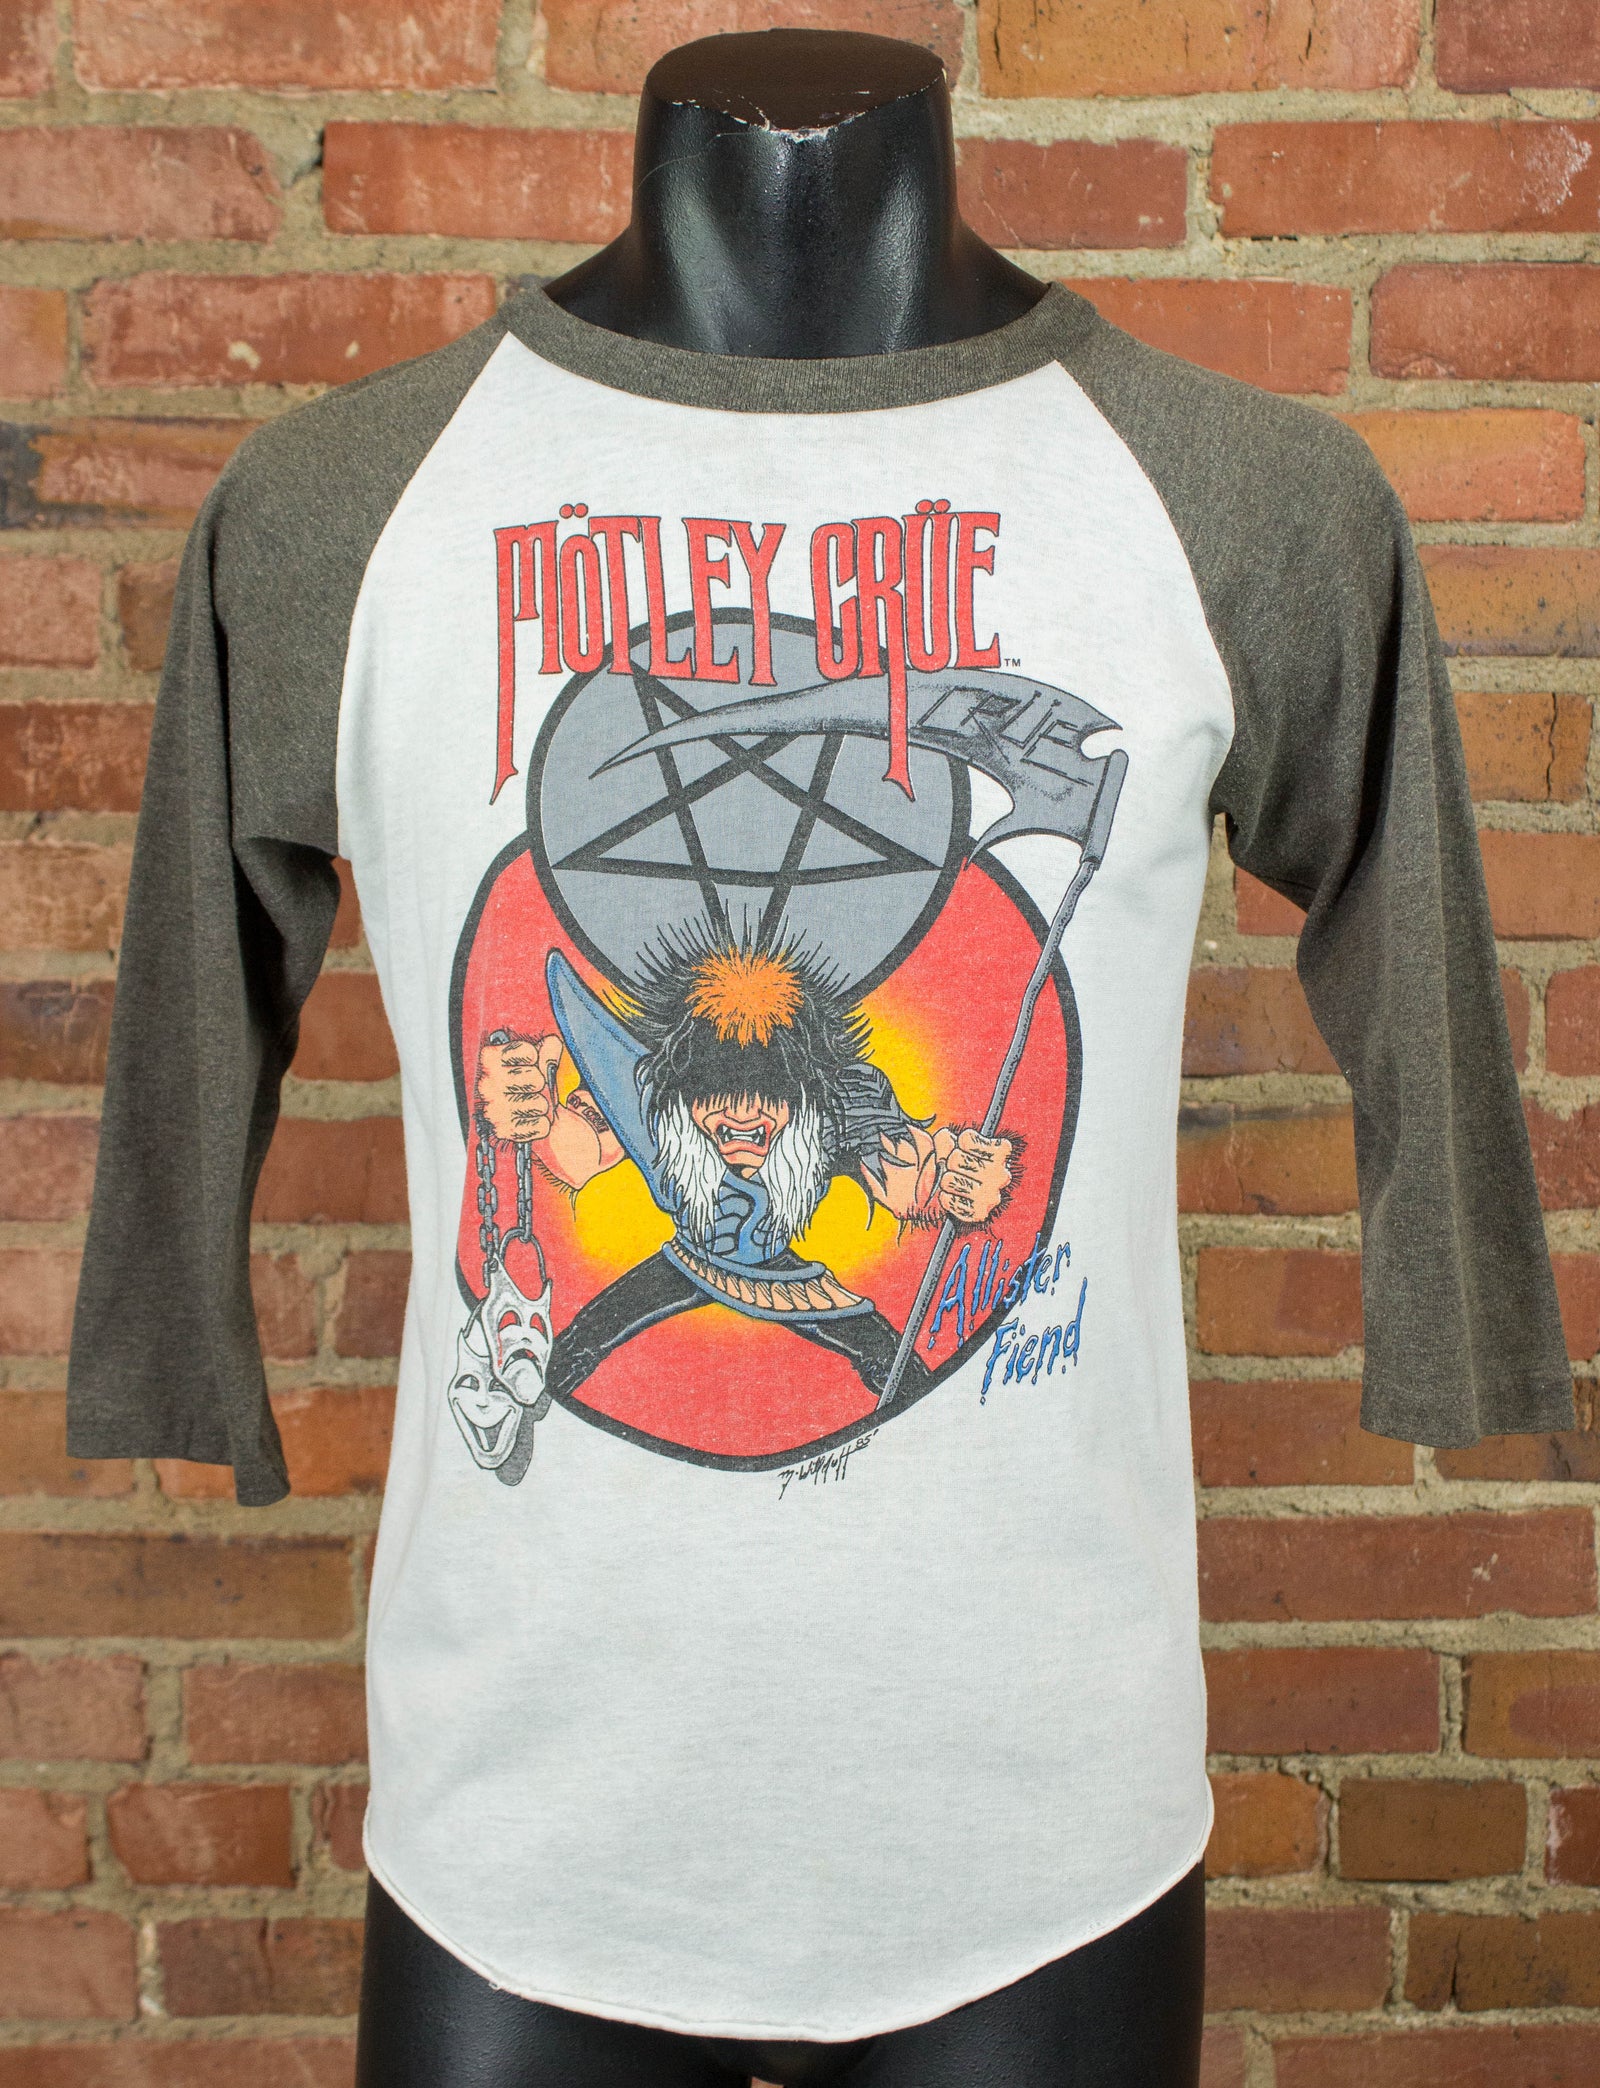 Vintage Motley Crue Concert T Shirt 1985 Theatre of Pain World Tour Allister Fiend Raglan Jersey Medium